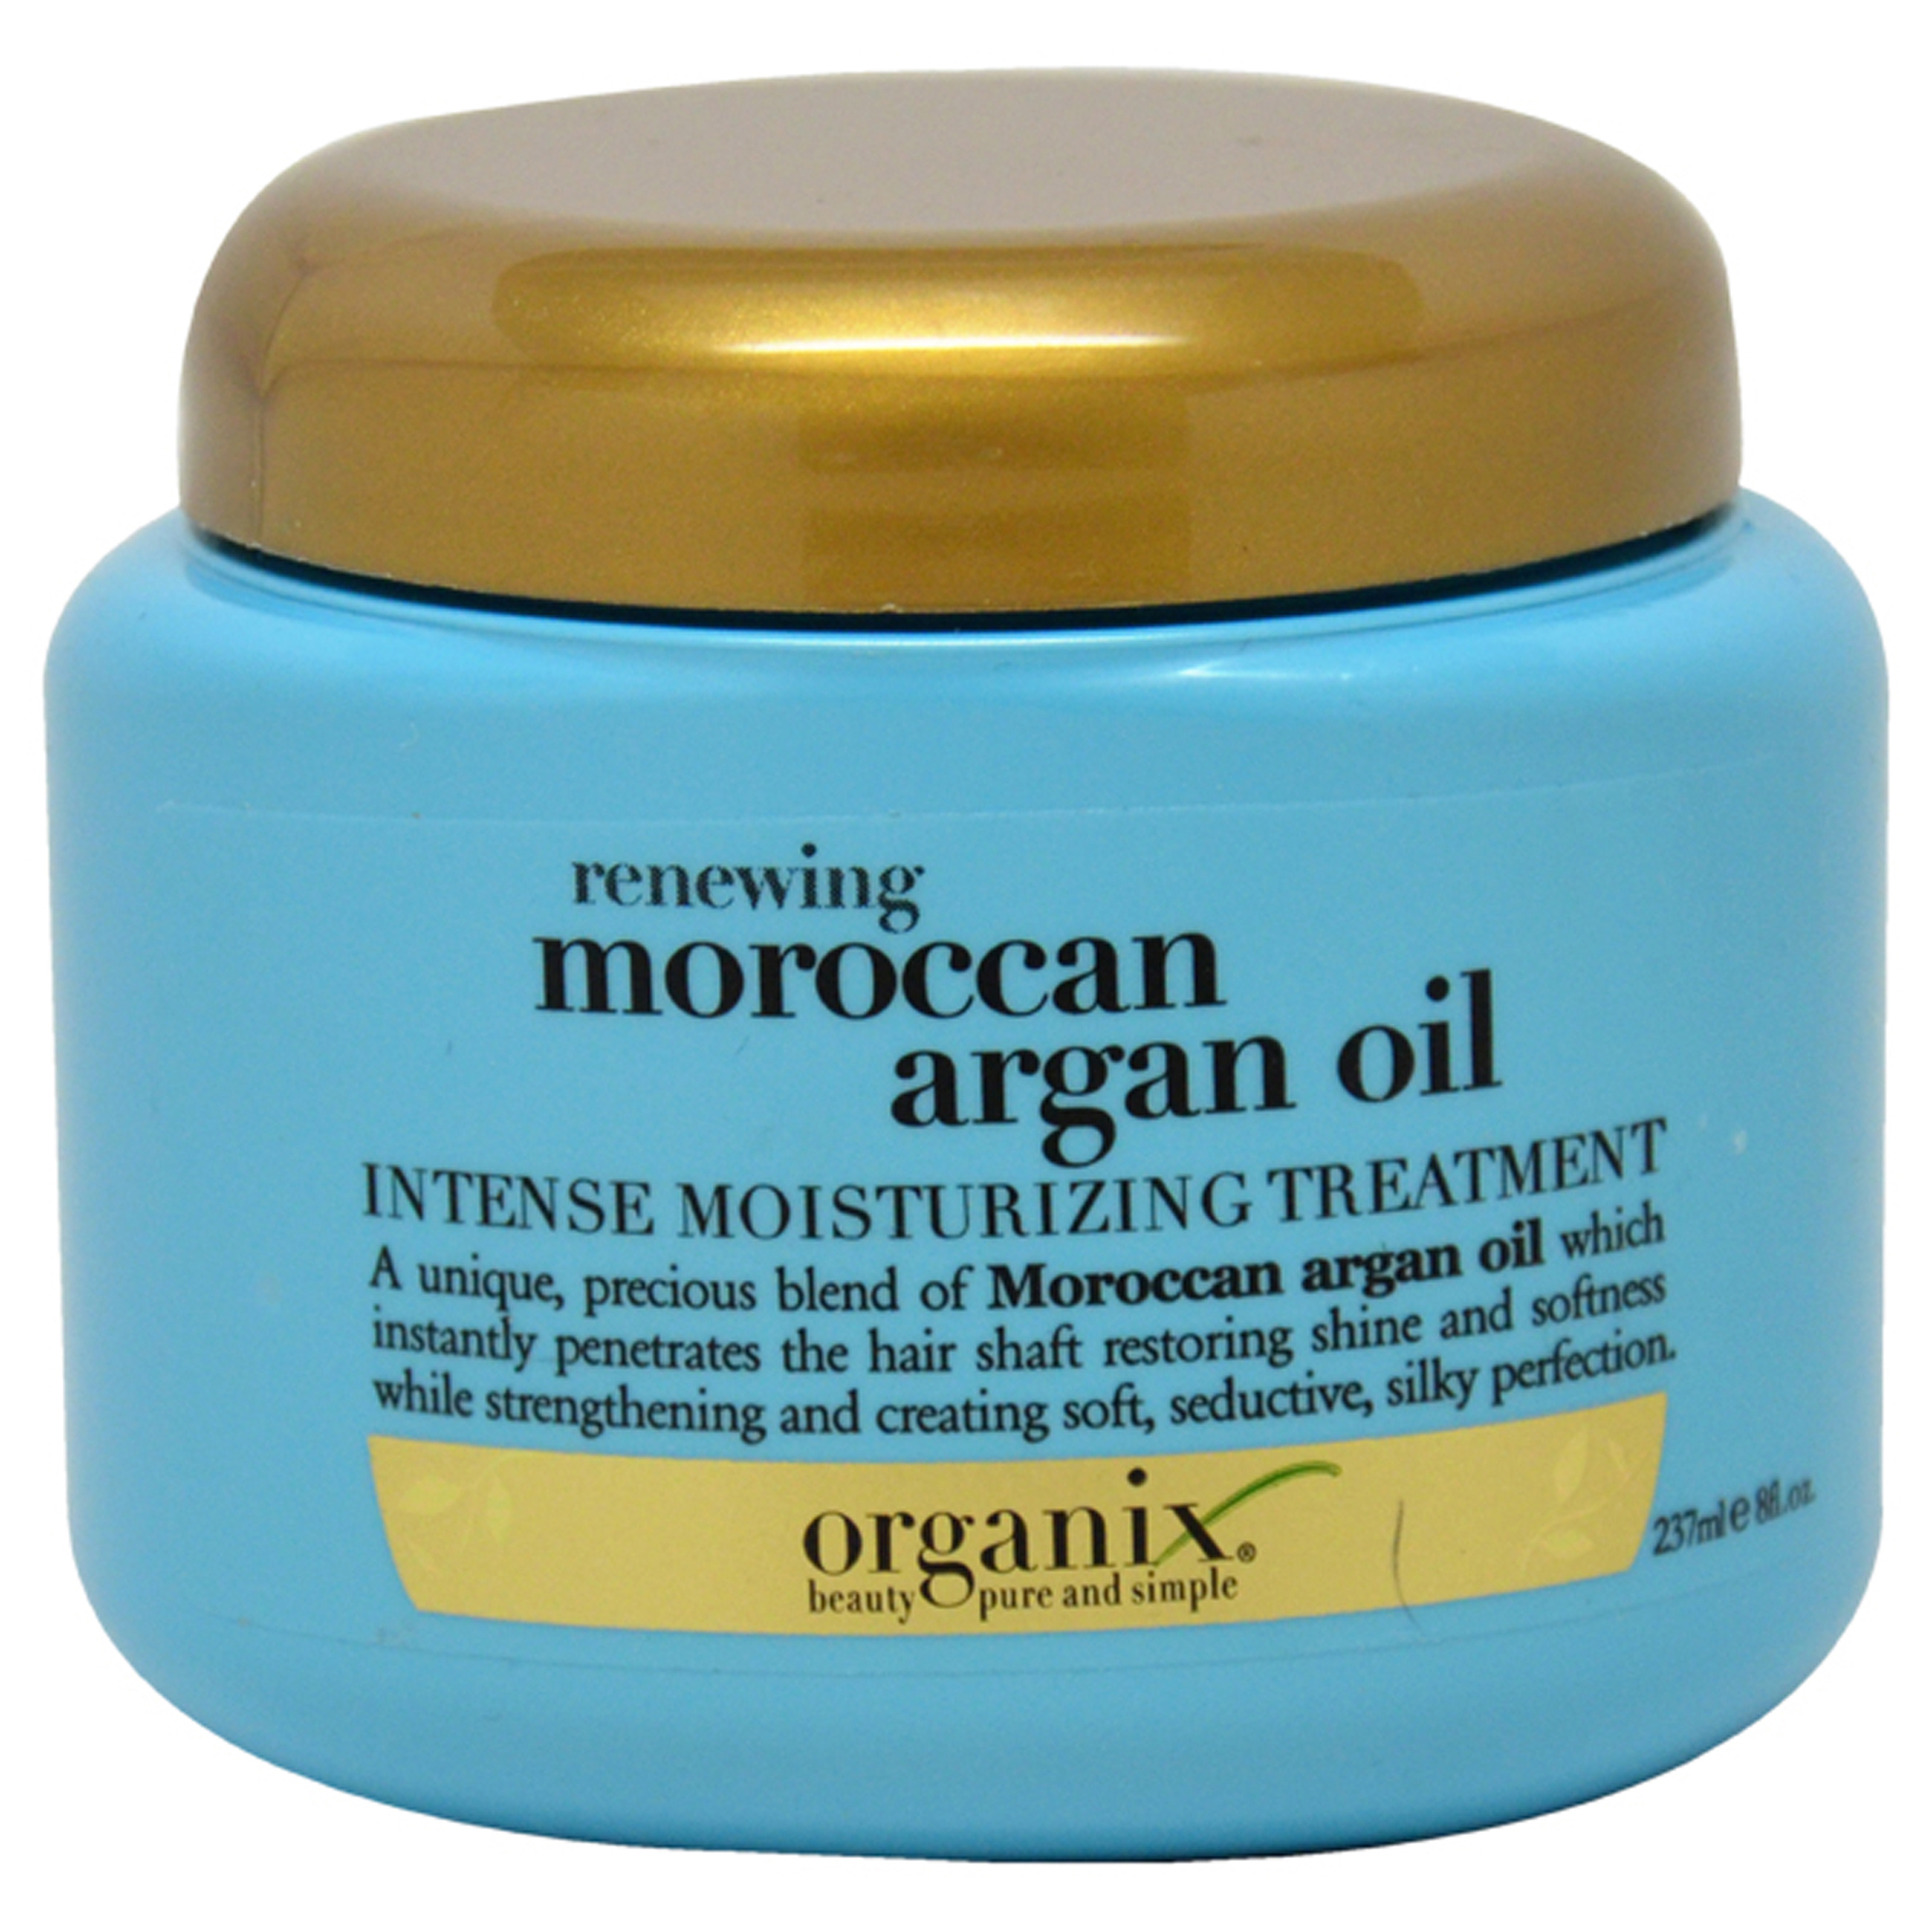 OGX Renewing Argan Oil of Morocco Intense Moisturizing Treatment, 8 oz - image 1 of 6